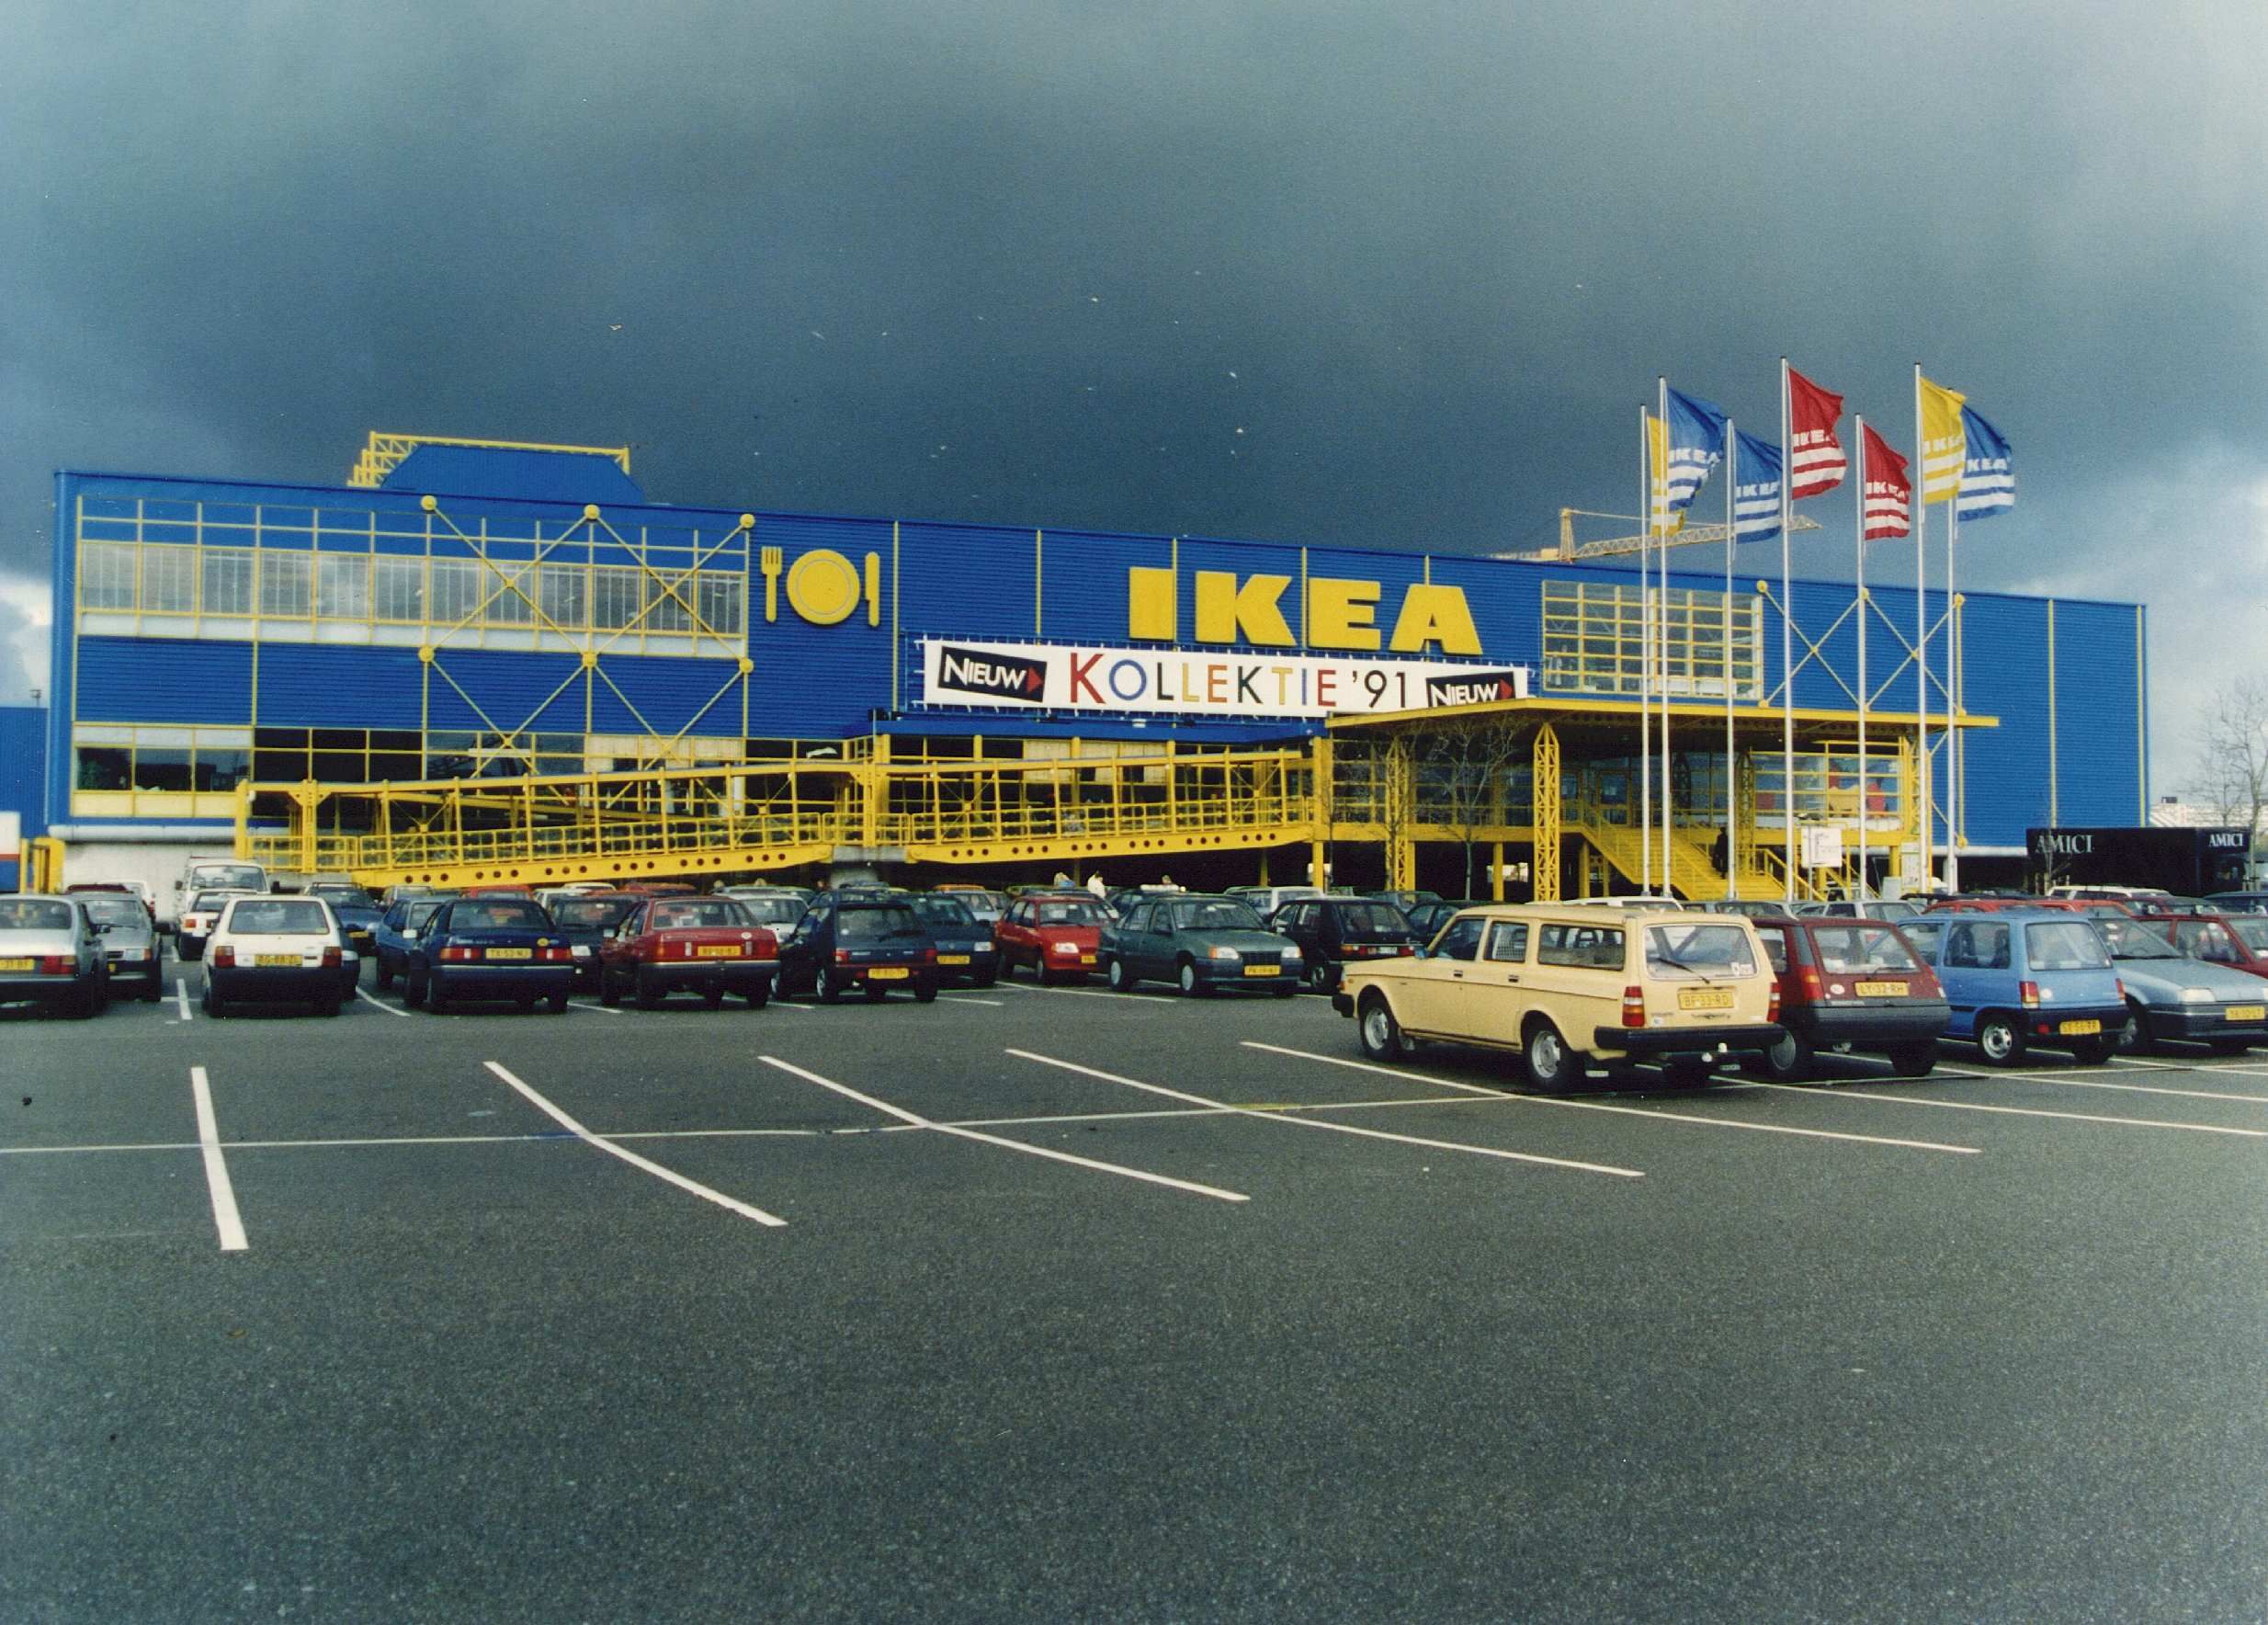 IKEA Amsterdam